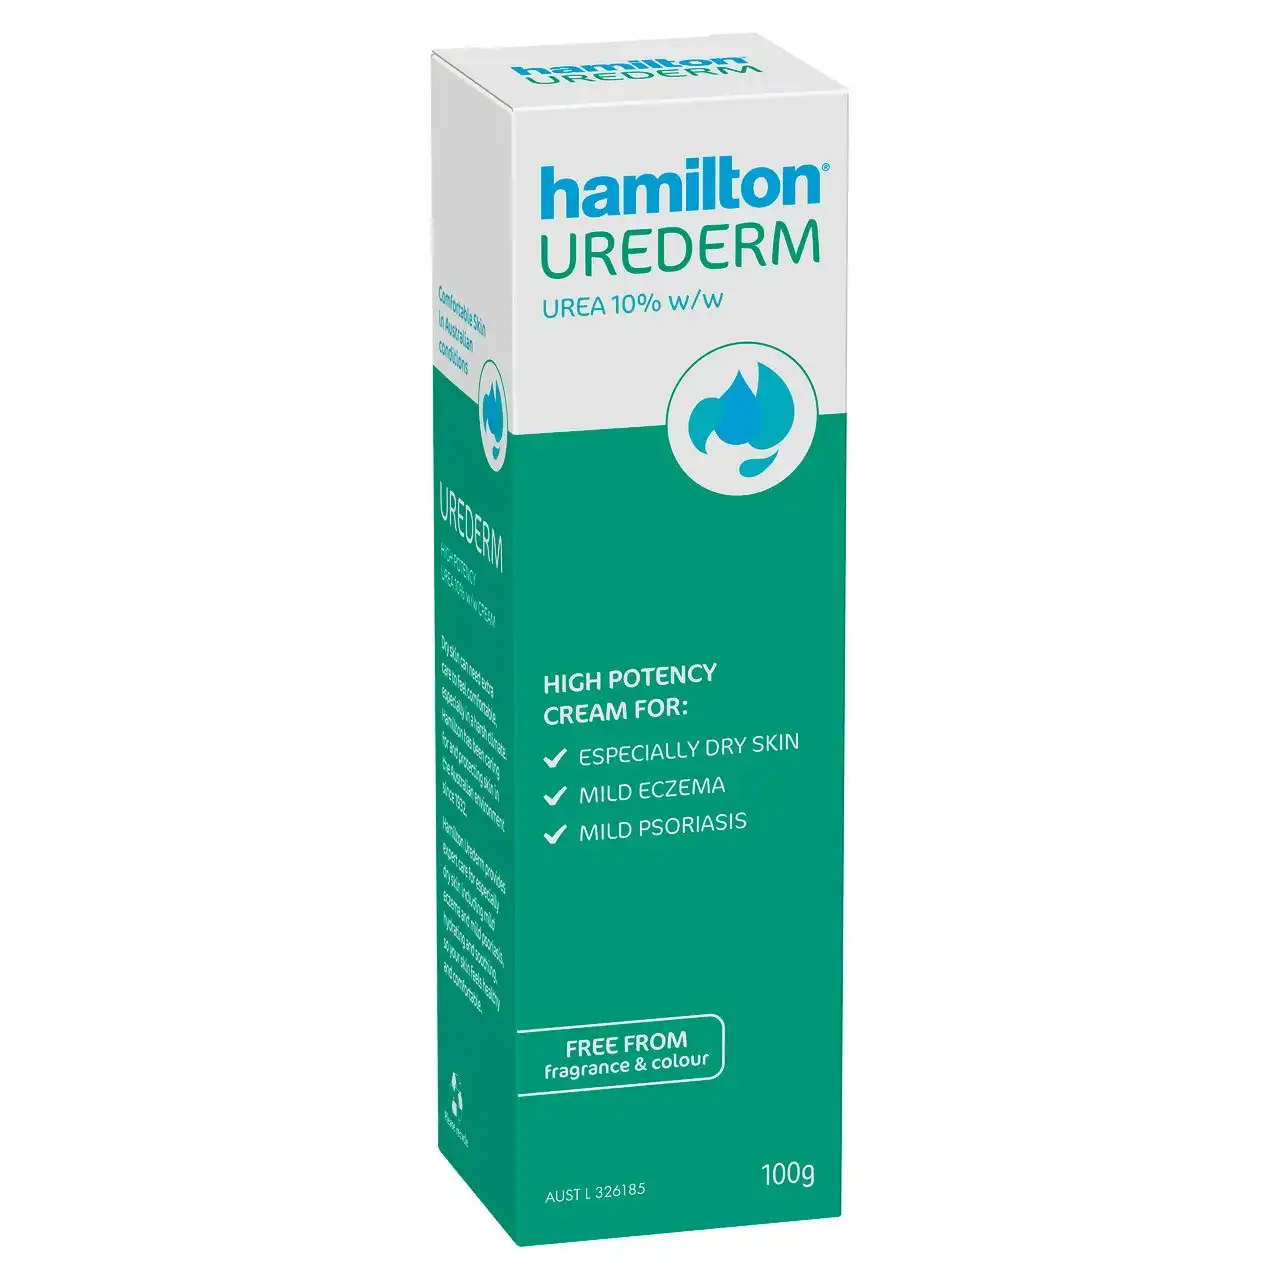 Hamilton(R) Urederm Cream 100gm